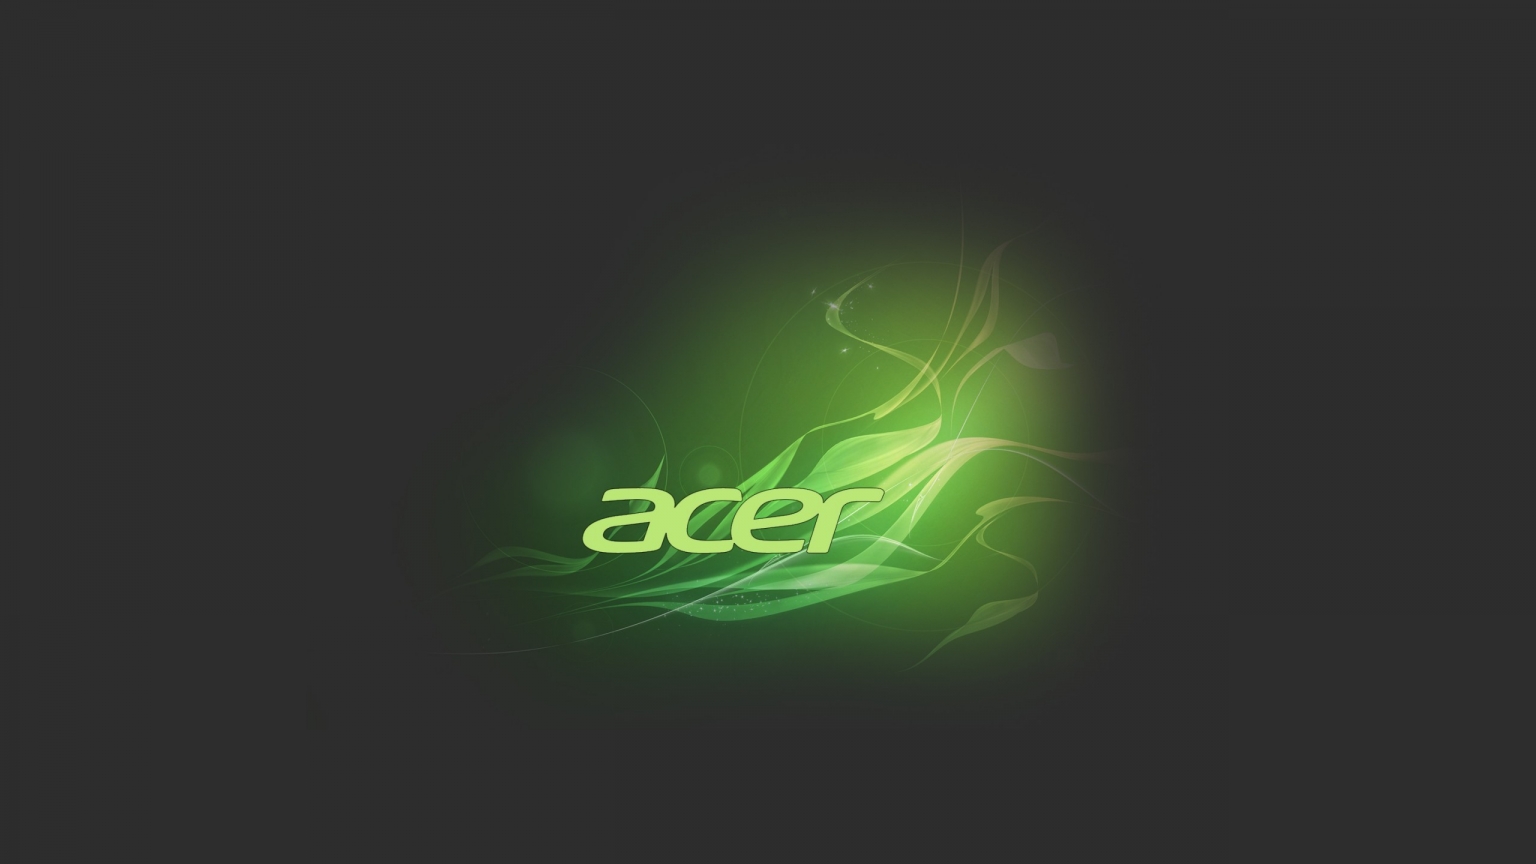 Acer Floral for 1536 x 864 HDTV resolution